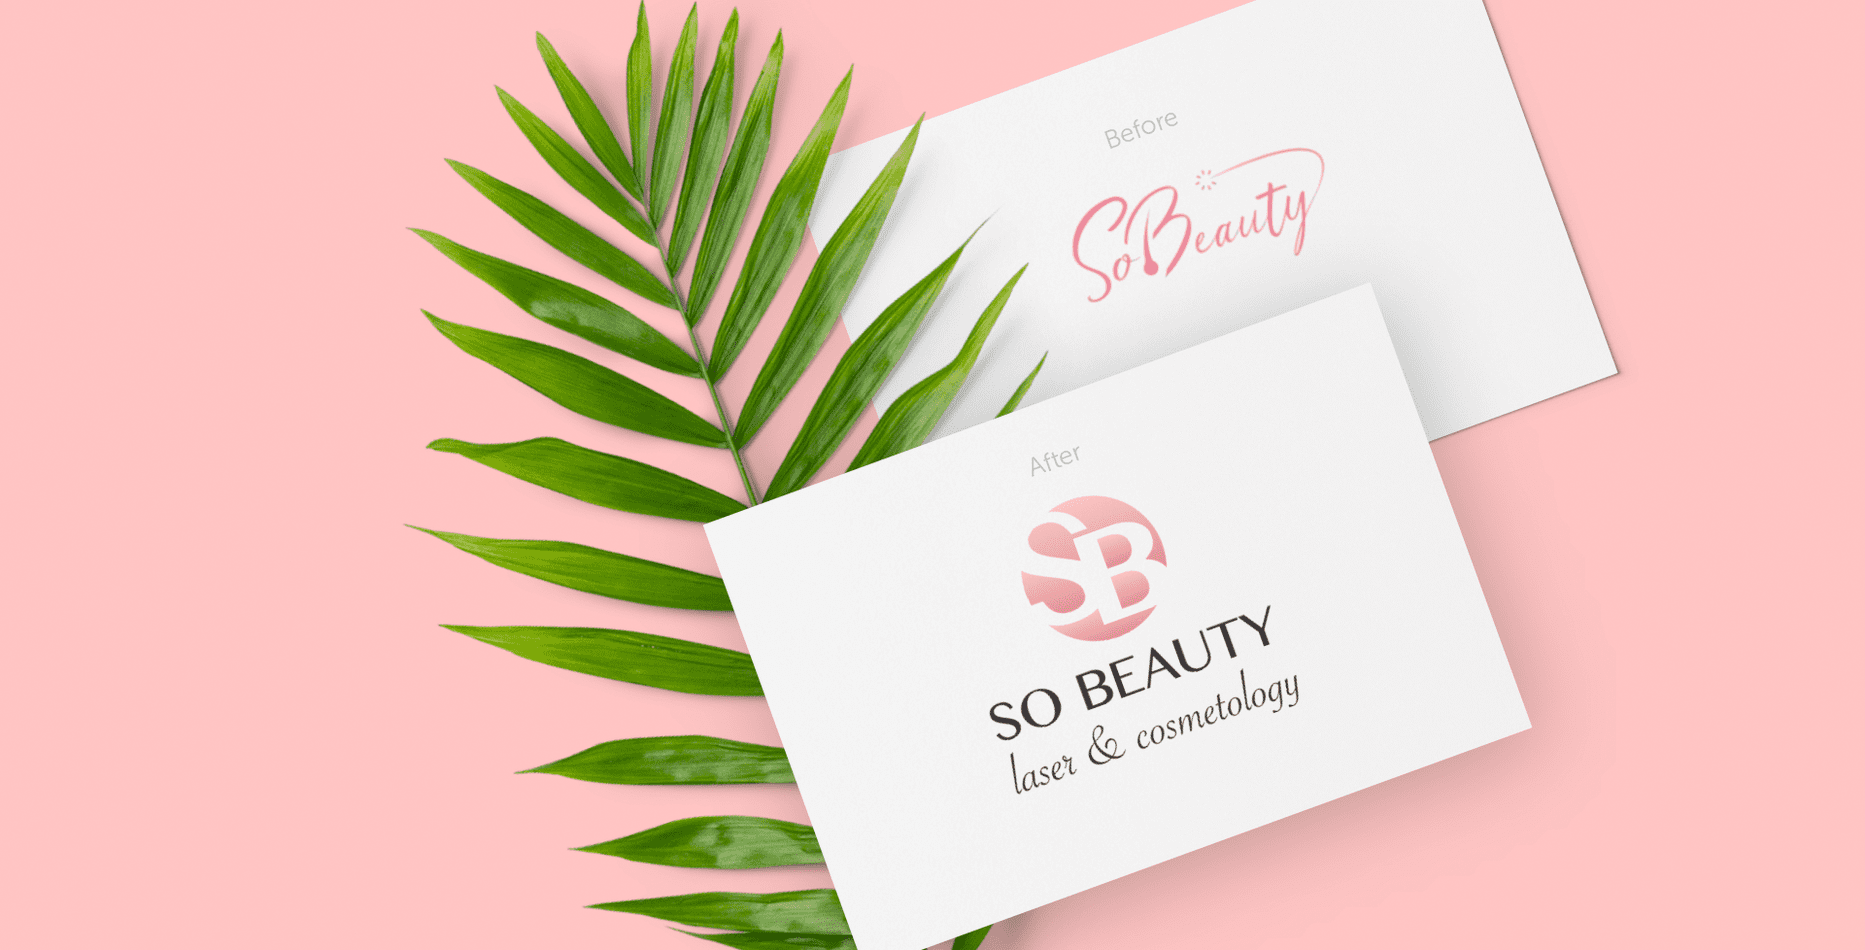 Case: corporate identity development, logo rebranding, website for So Beauty — Rubarb - Image - 2